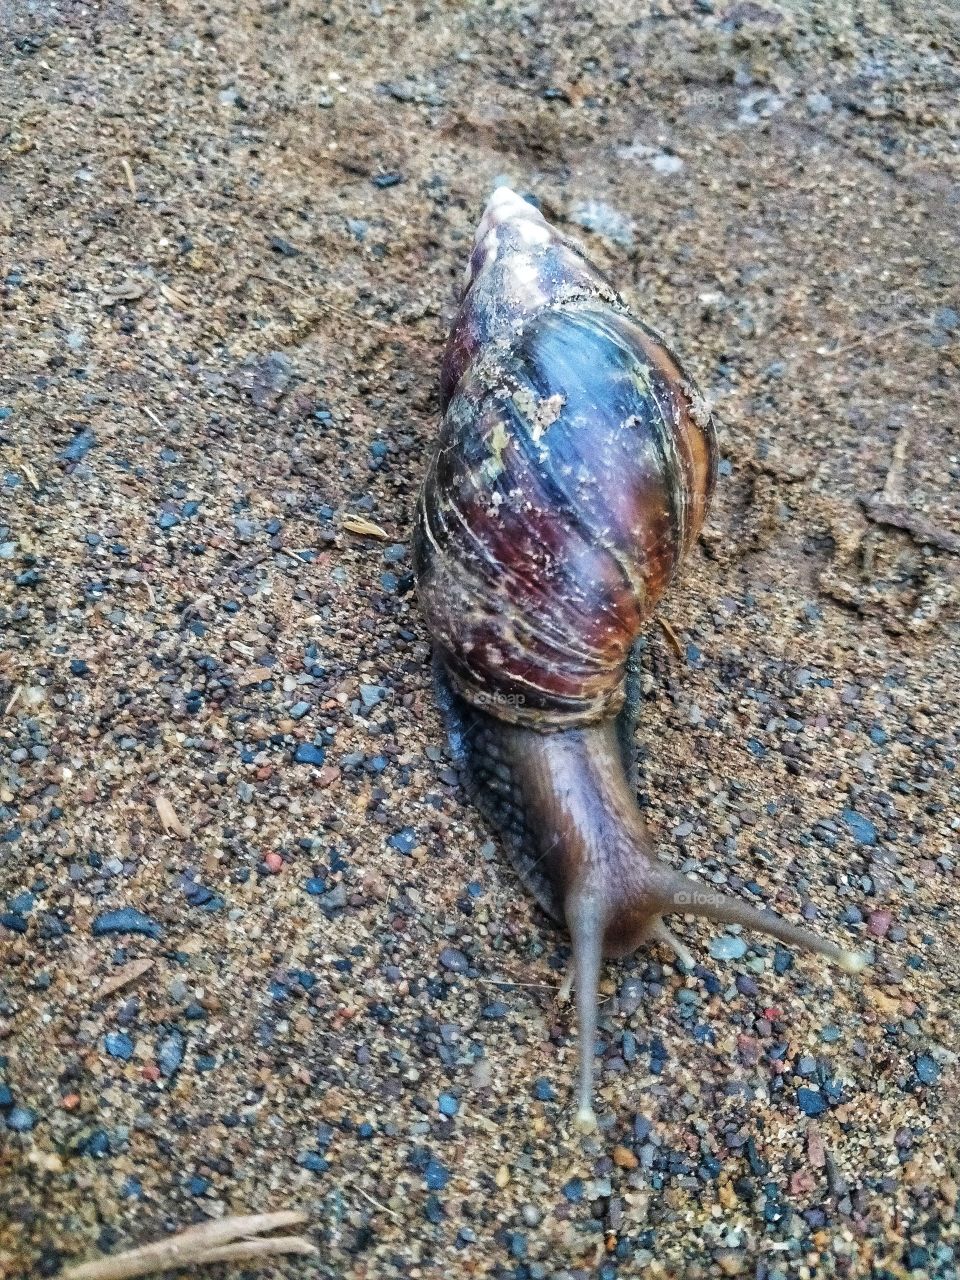 snail crawling on a sandy ground